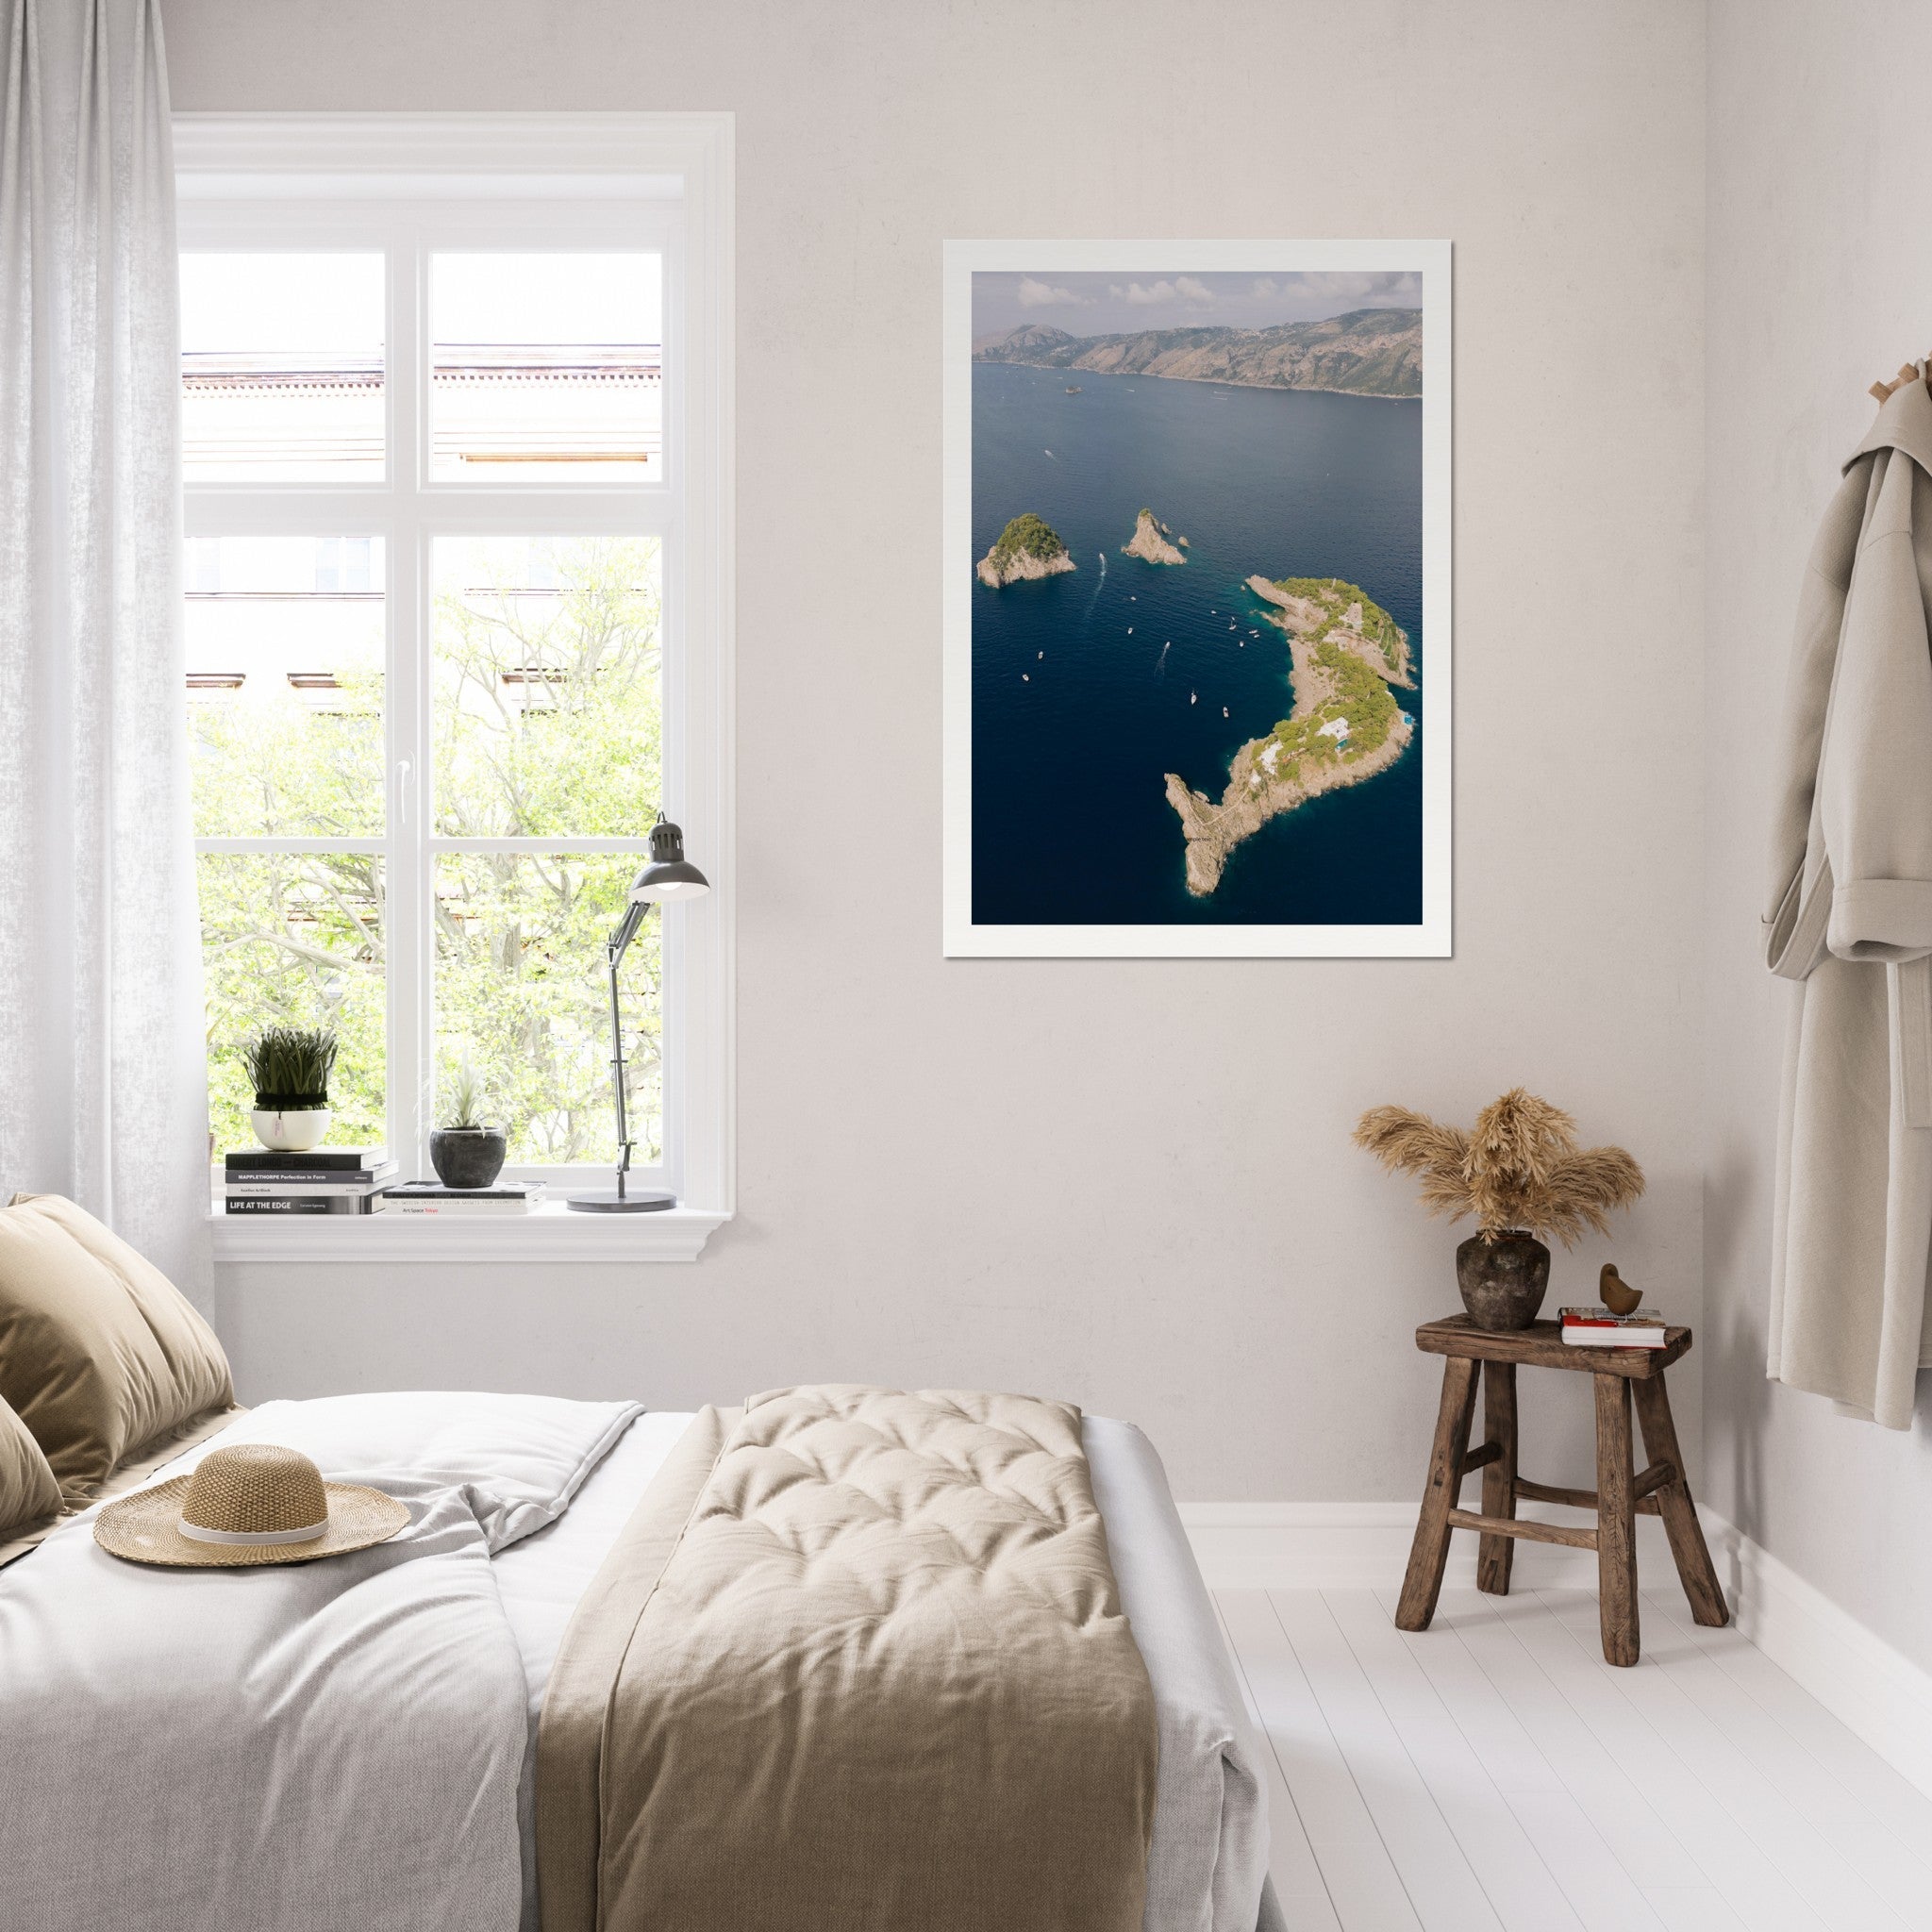 Li Galli Island - Positano | Amalfi Coast | Drone Shot | Print Museum-Quality Matte Paper - AMALFITANA STORE